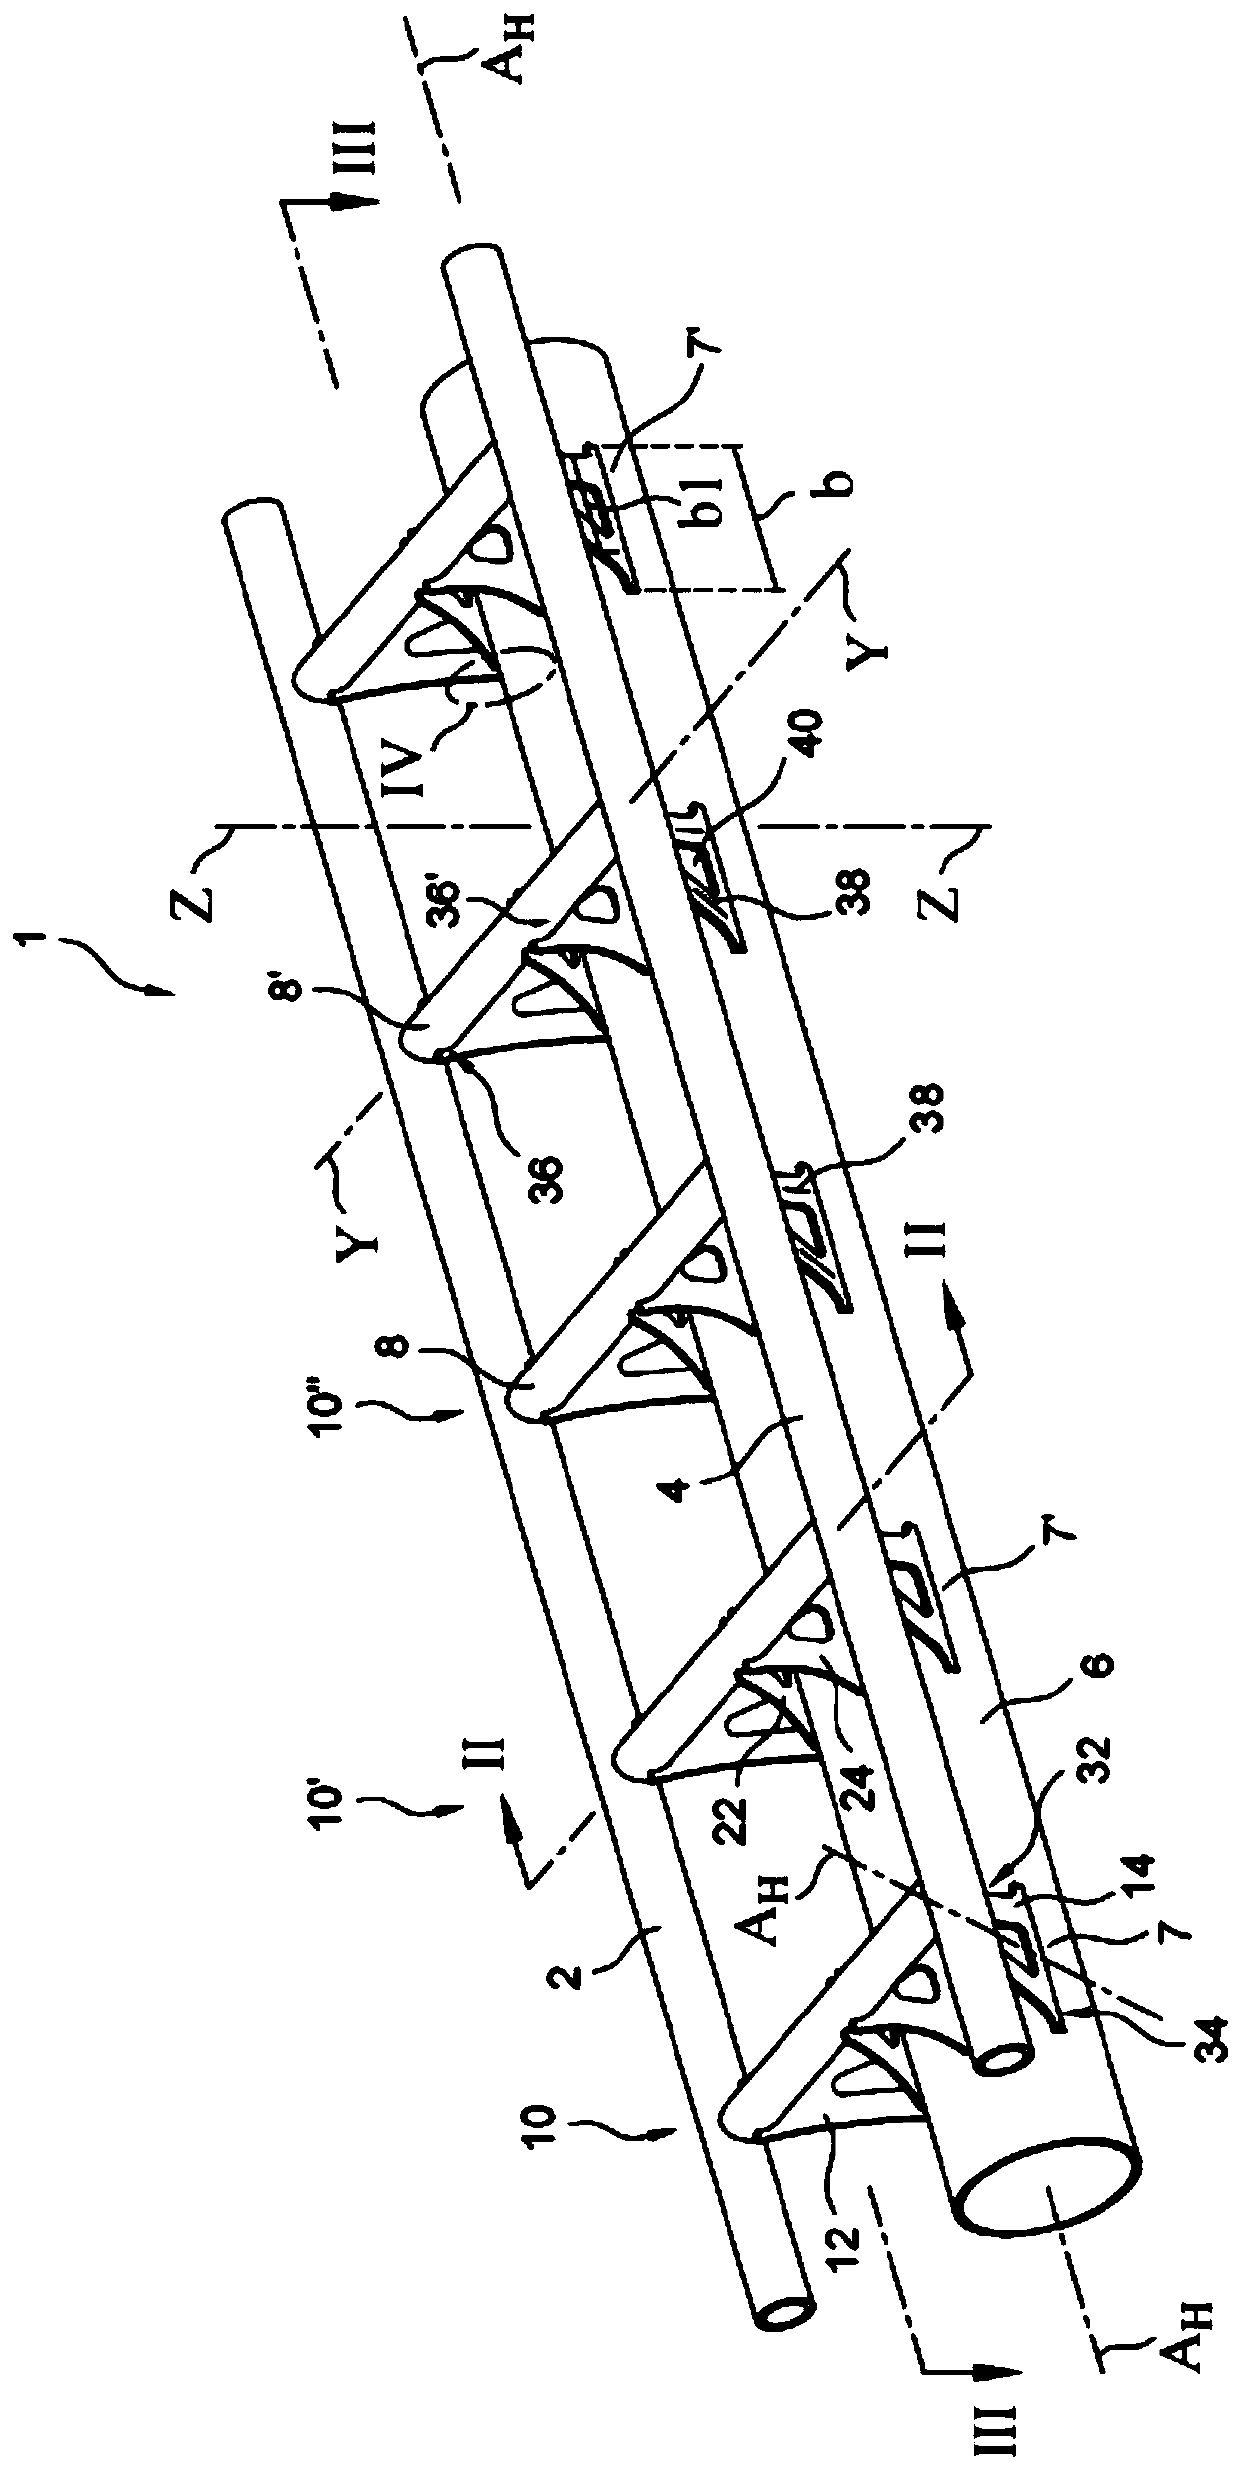 Backbone rail for a roller coaster and roller coaster arrangement